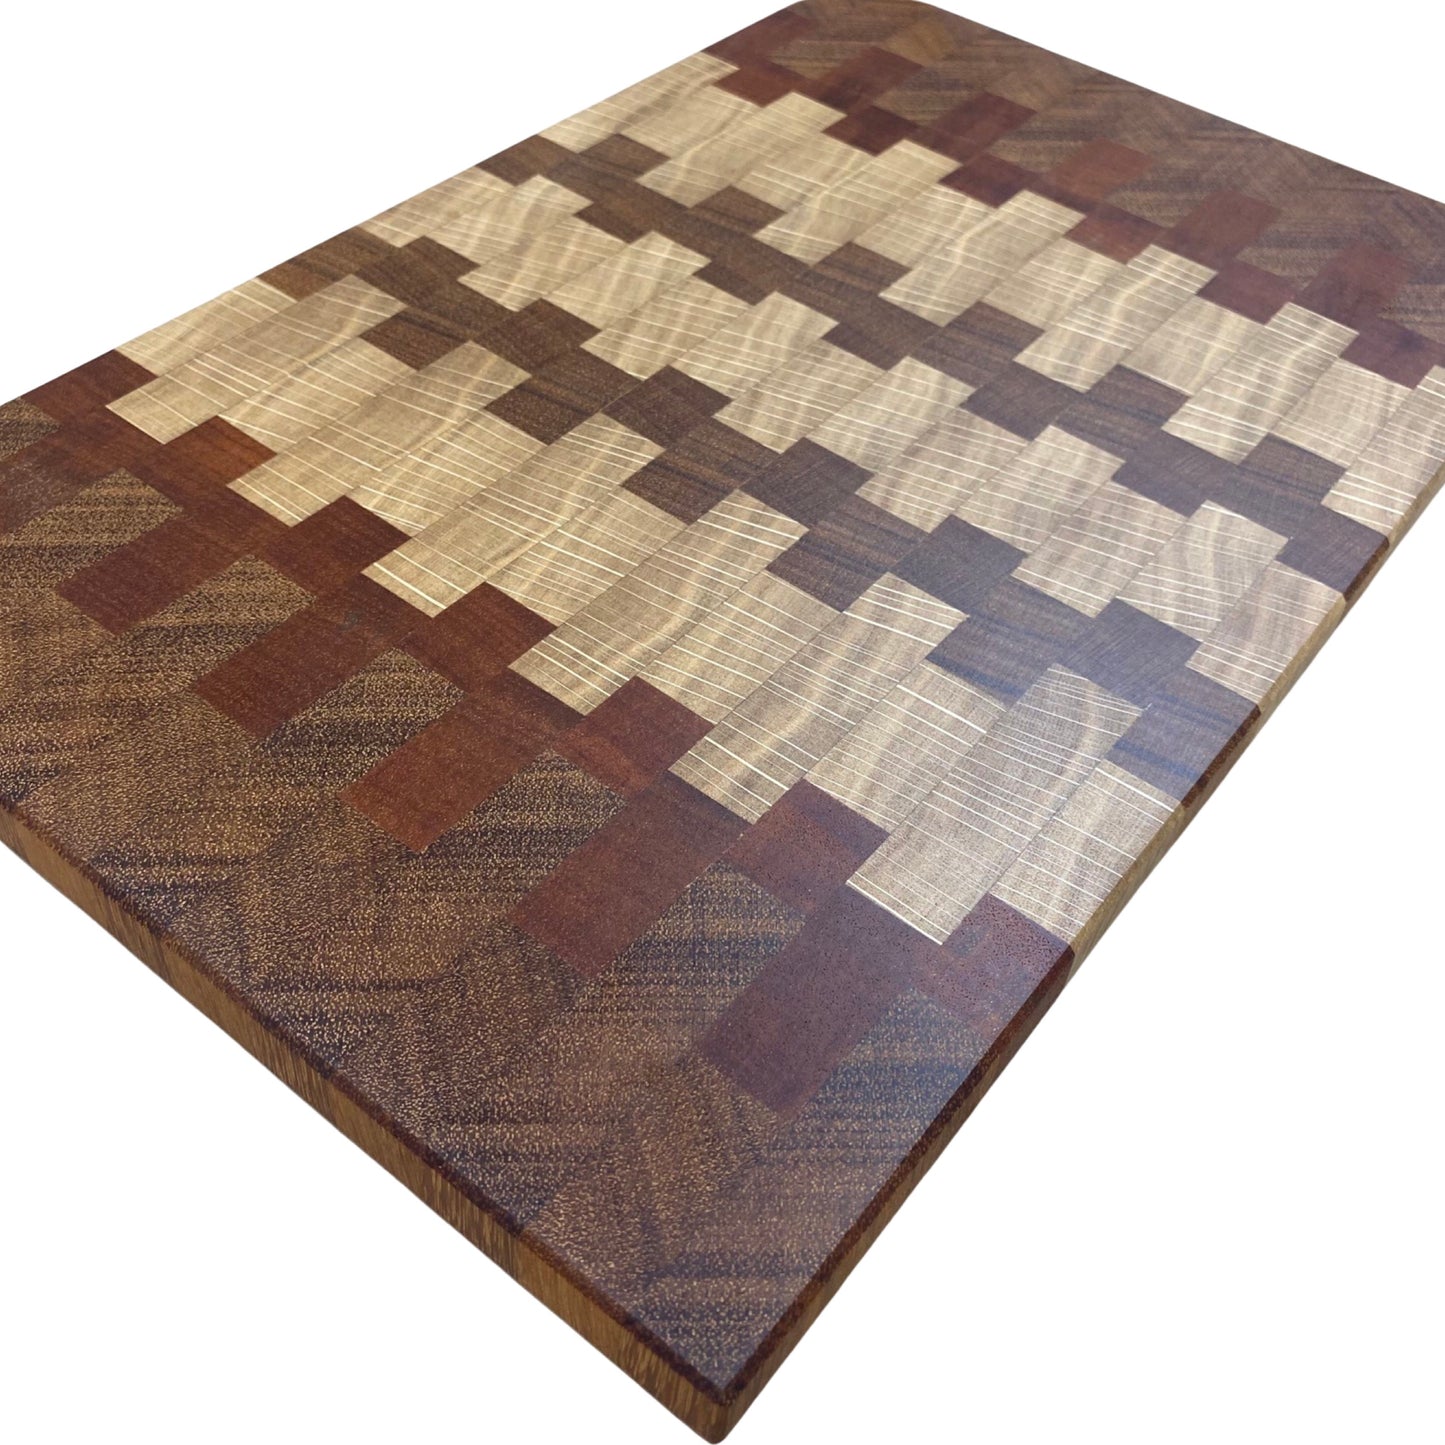 Hardwood End Grain Chopping Board - 39cm x 25cm